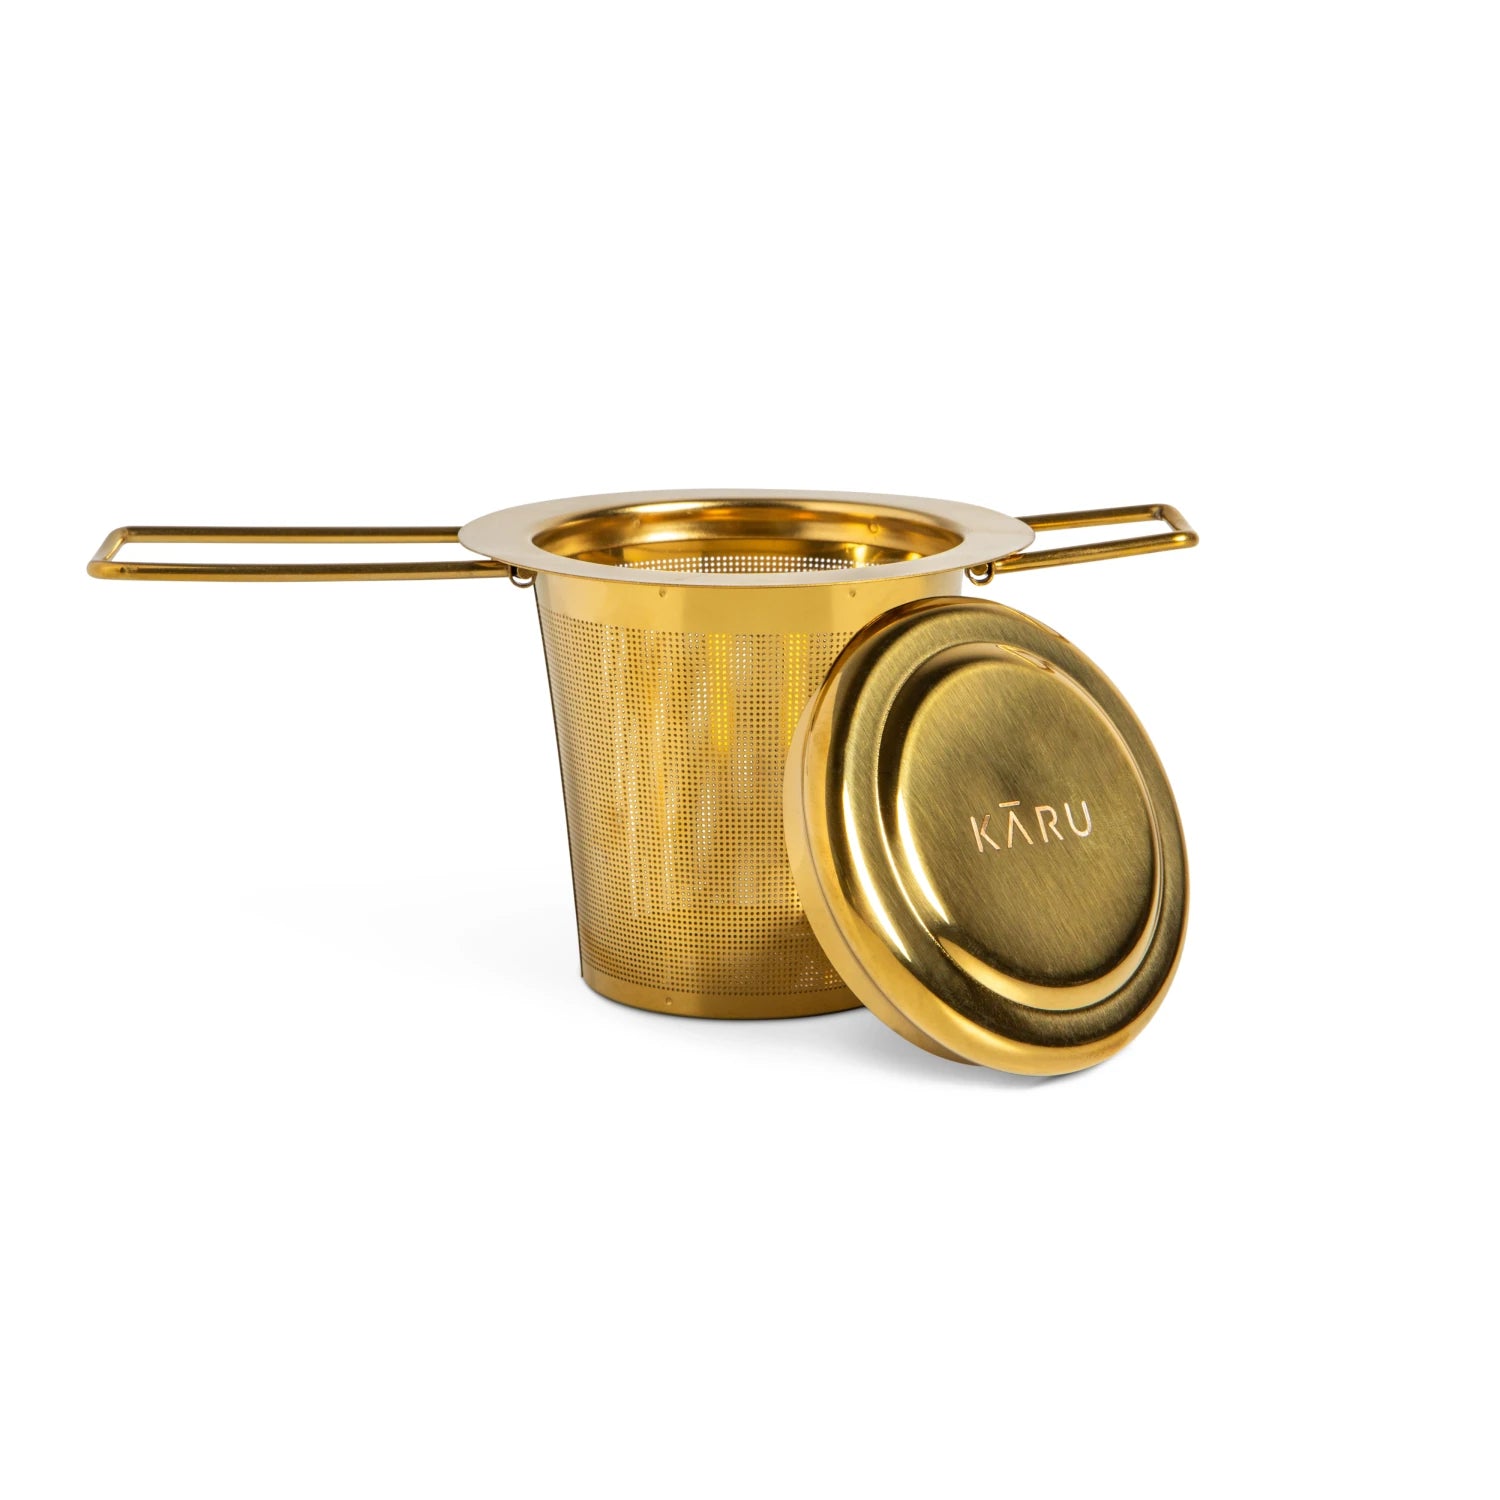 Stainless steel tea strainer - gold